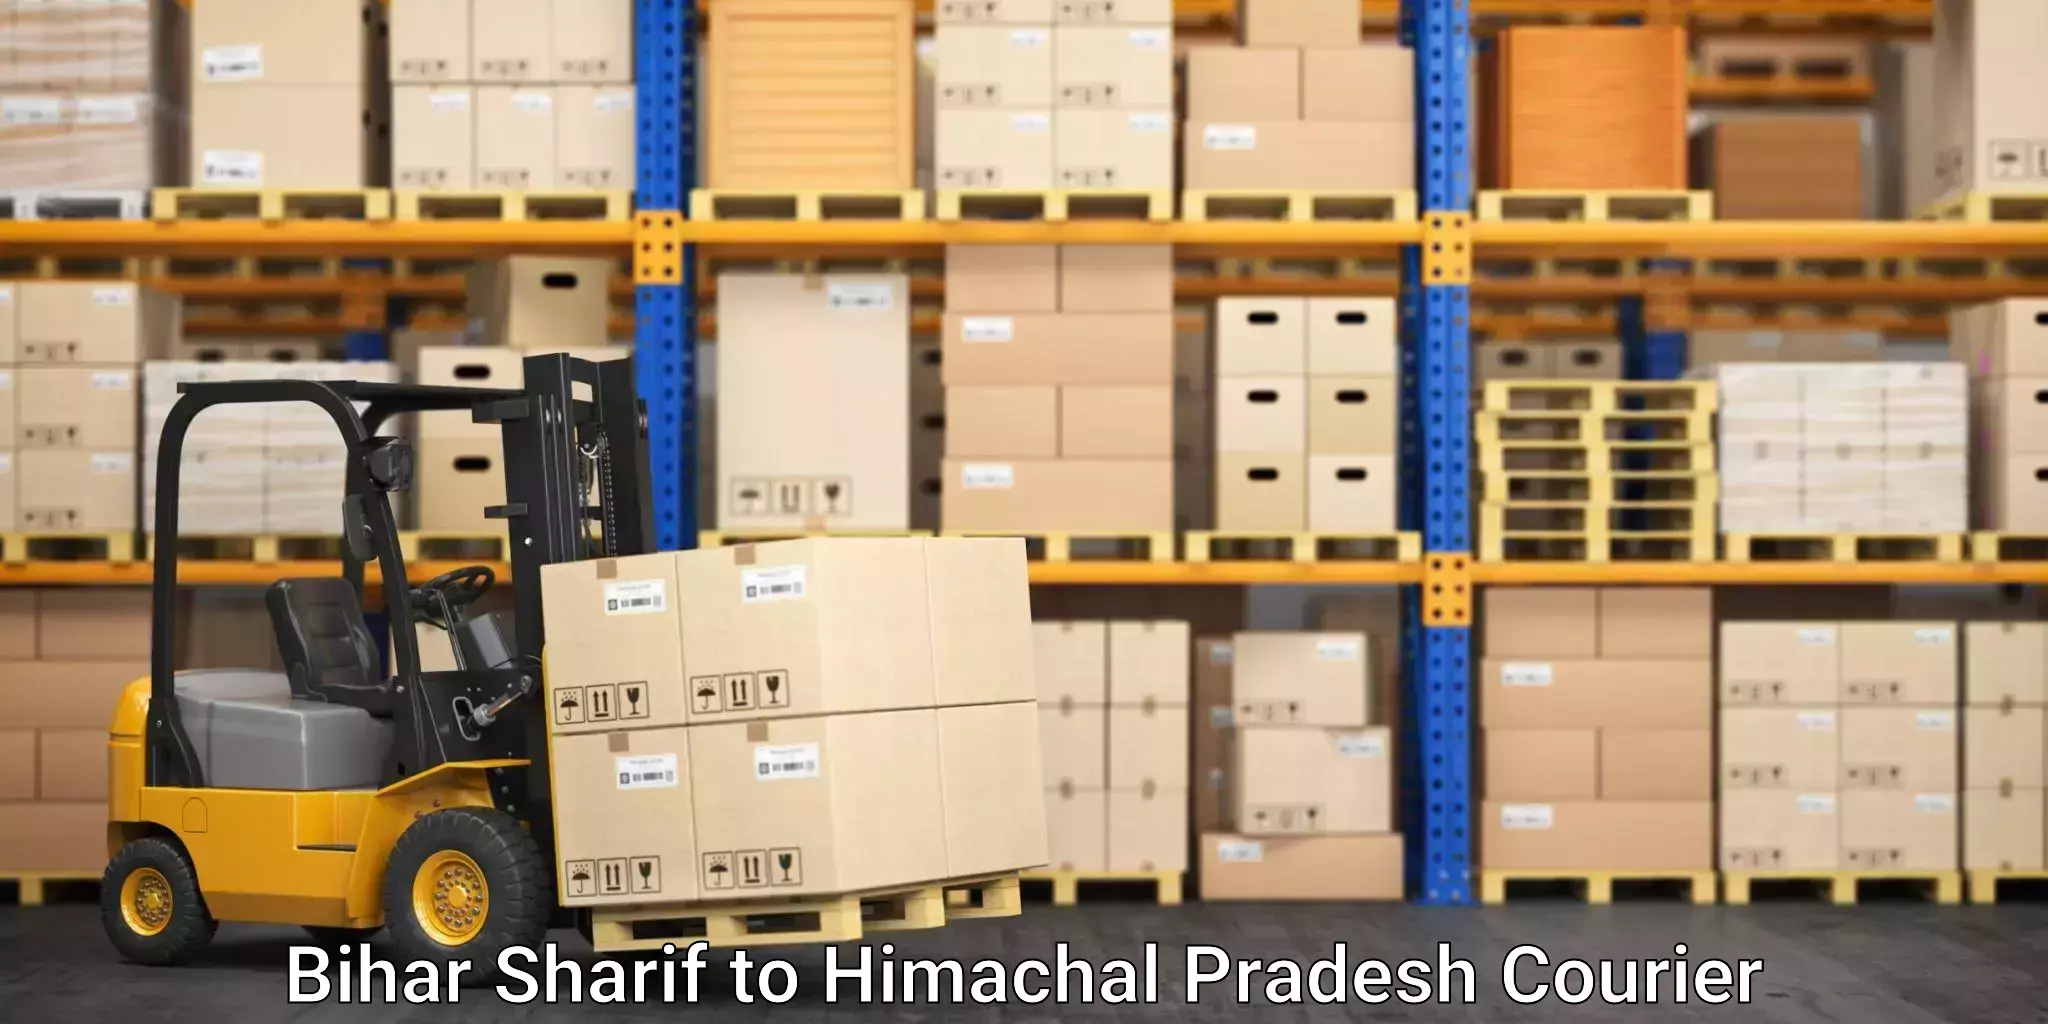 Furniture moving experts Bihar Sharif to Himachal Pradesh